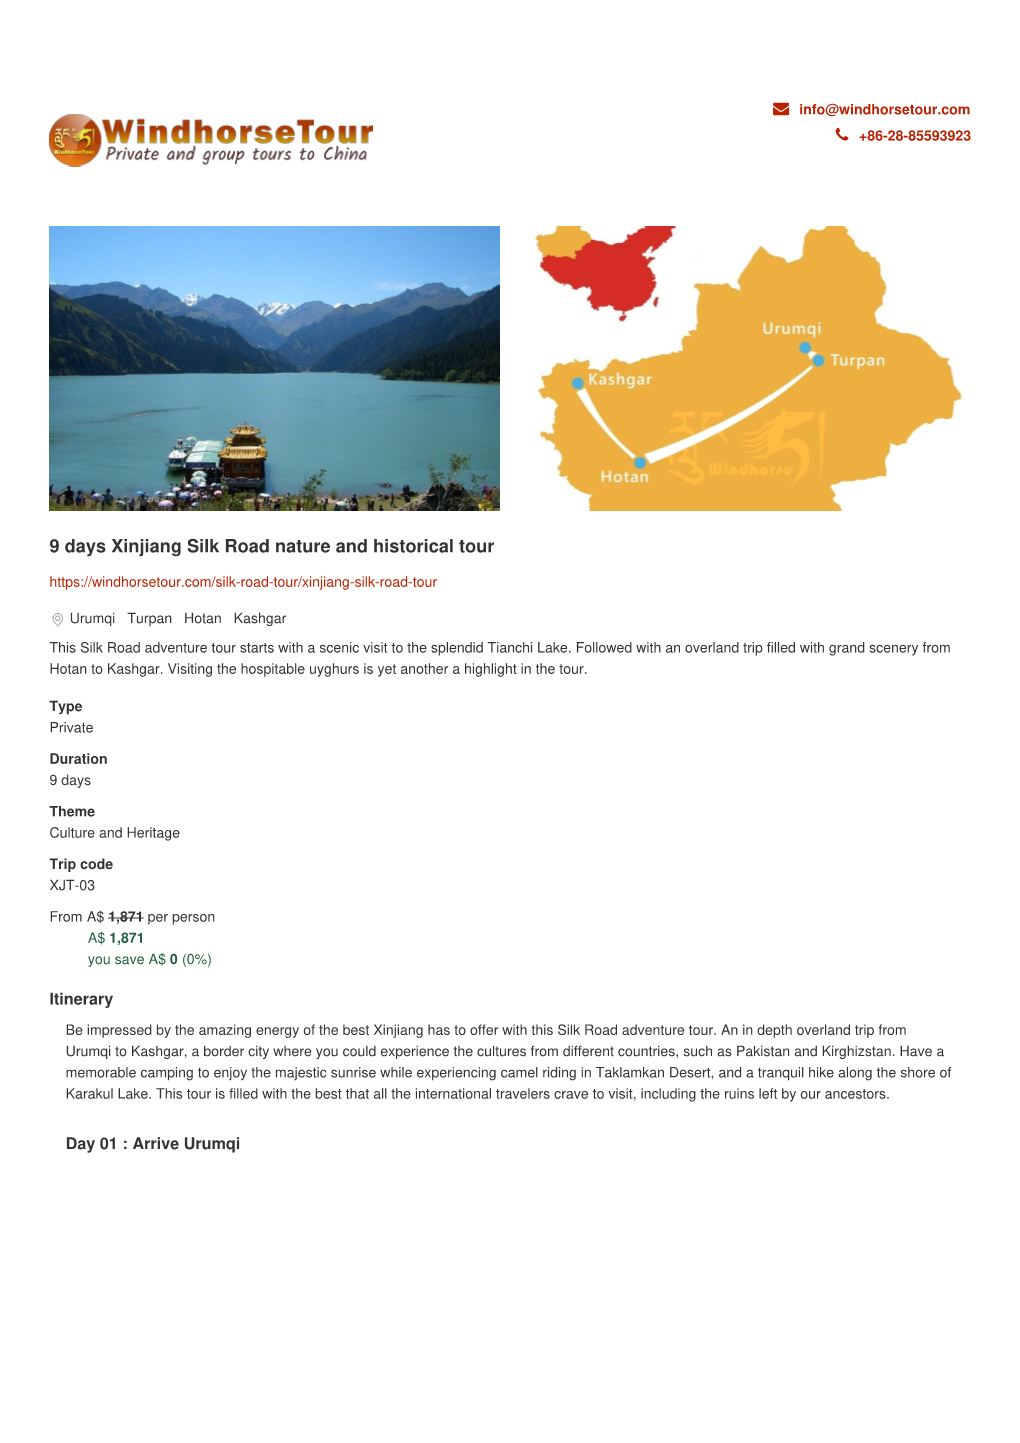 9 Days Xinjiang Silk Road Nature and Historical Tour